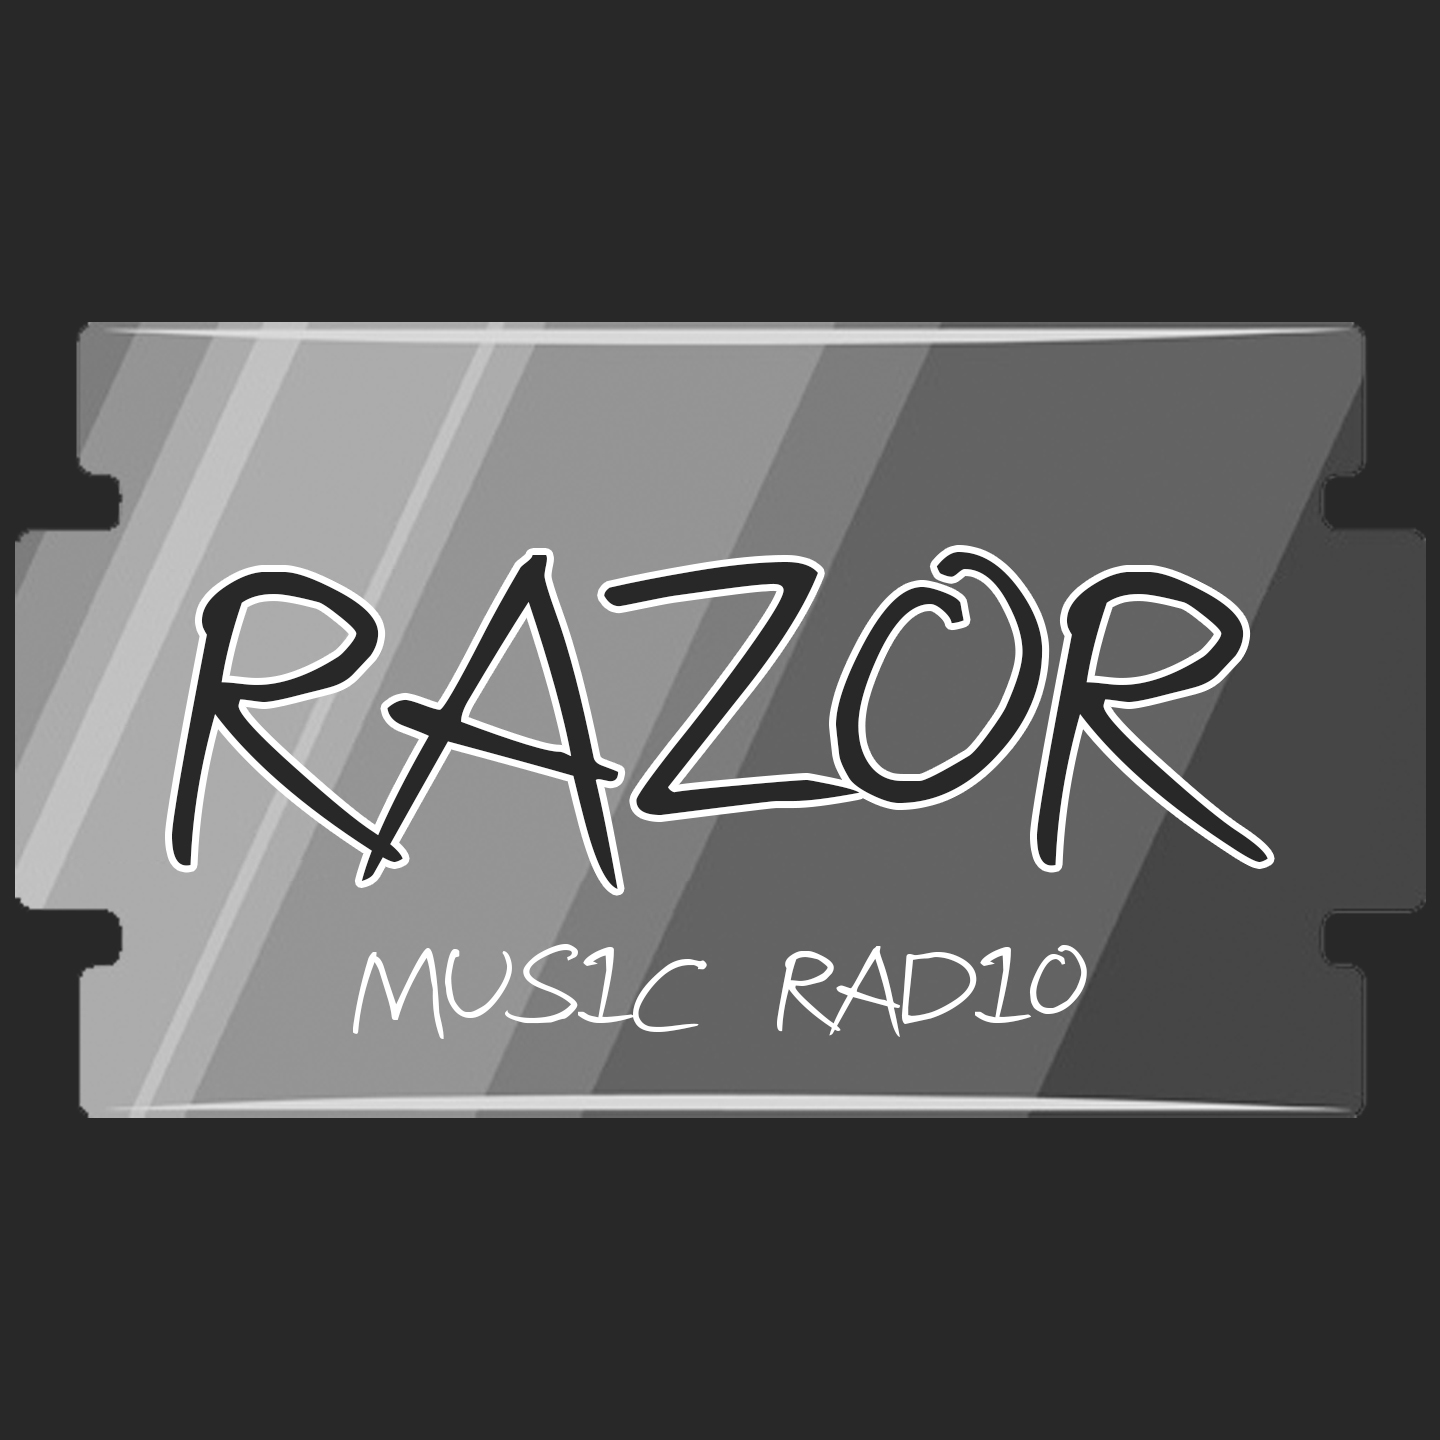 Razor Music Radio